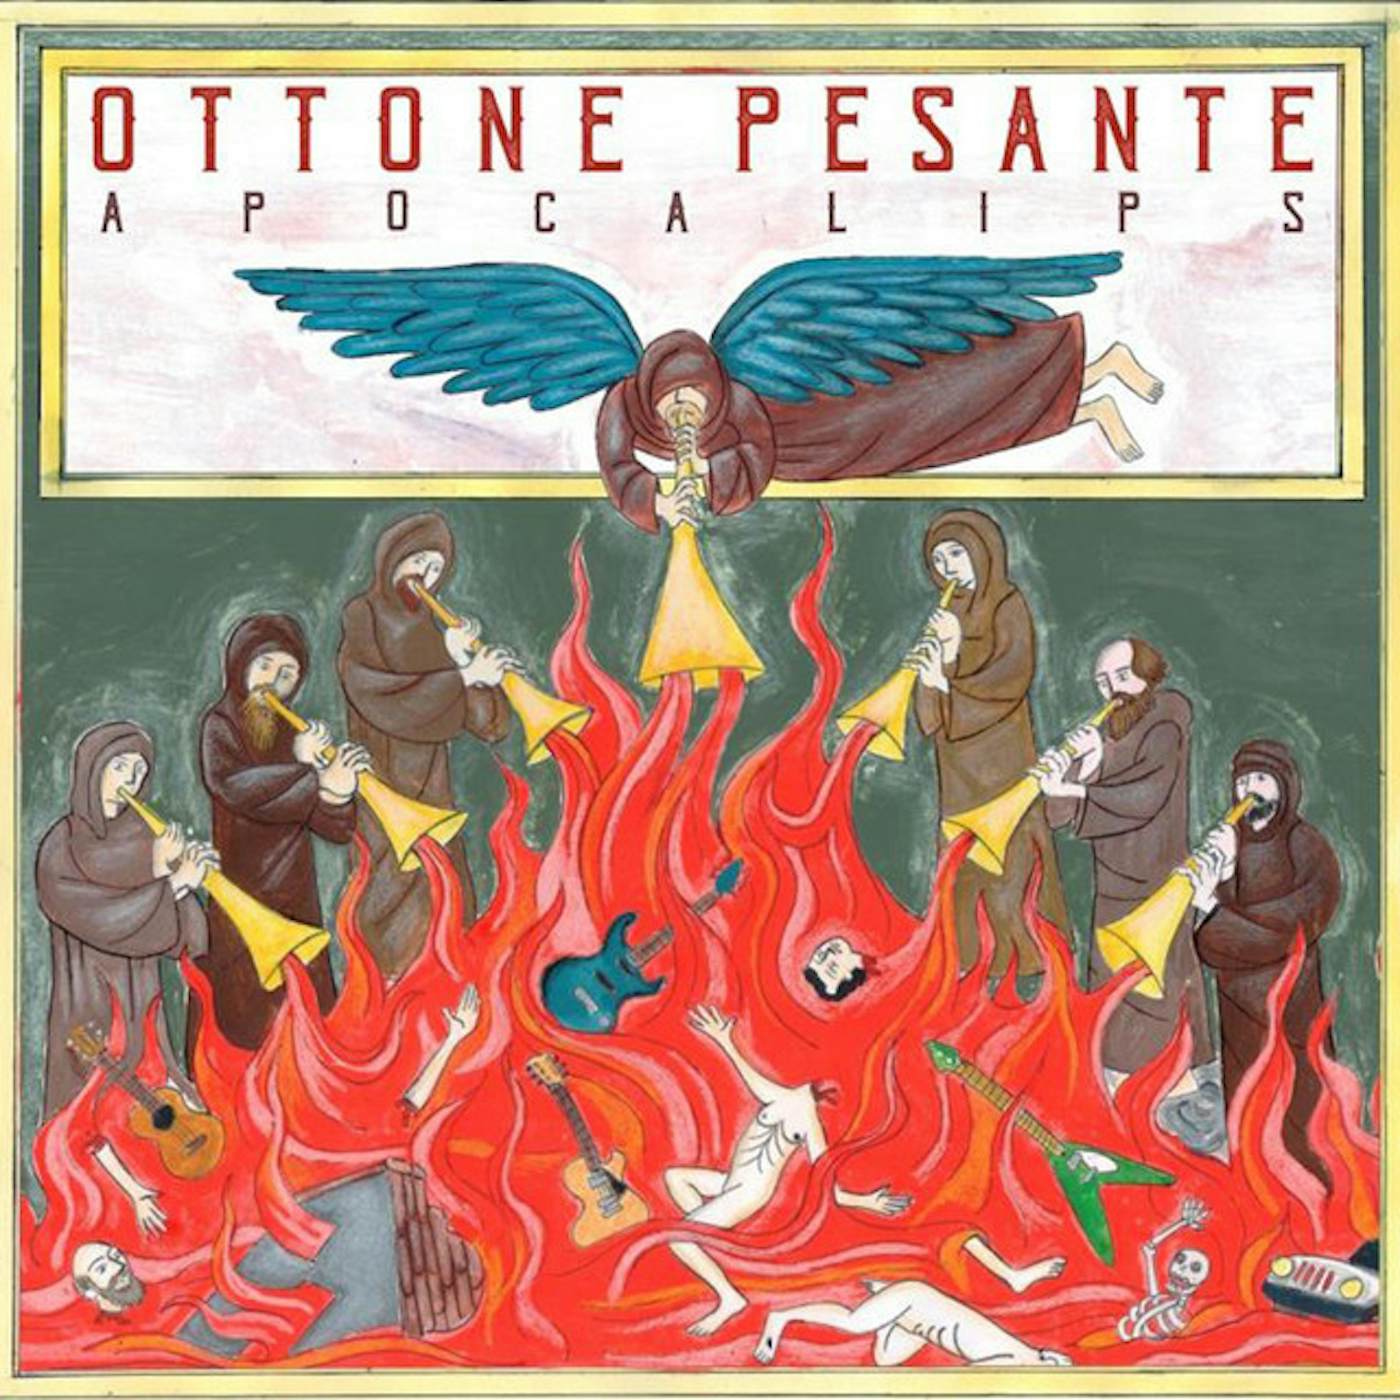 Ottone Pesante APOCALIPS CD